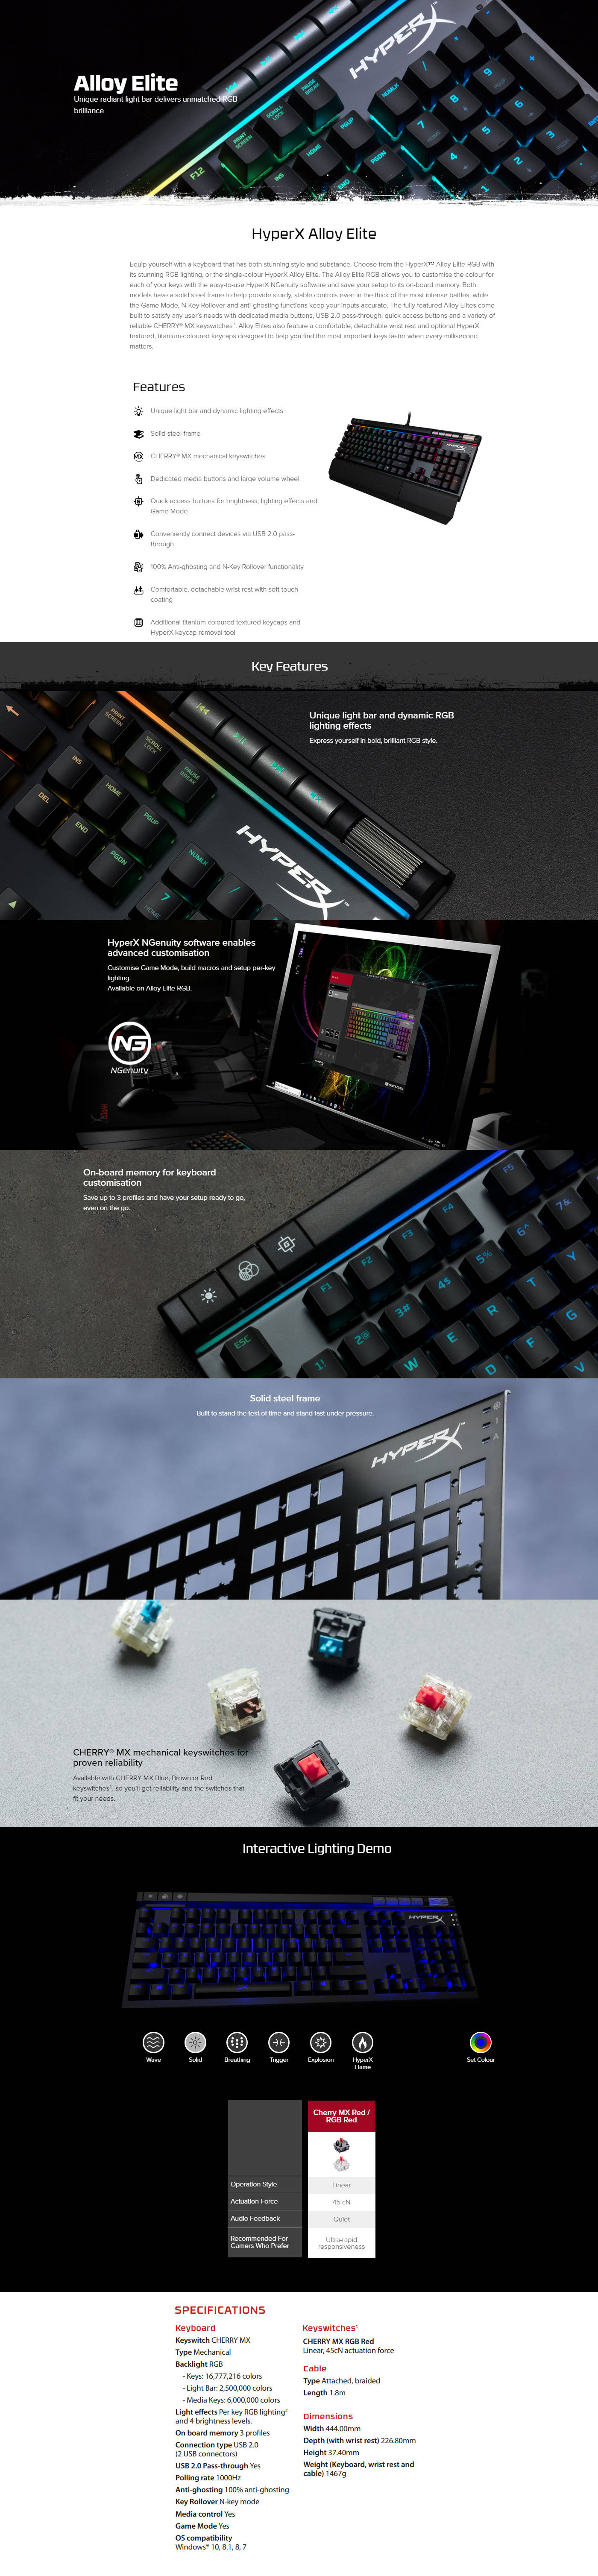  Buy Online HyperX Alloy Elite RGB Mechanical Gaming Keyboard - Cherry MX RGB Red